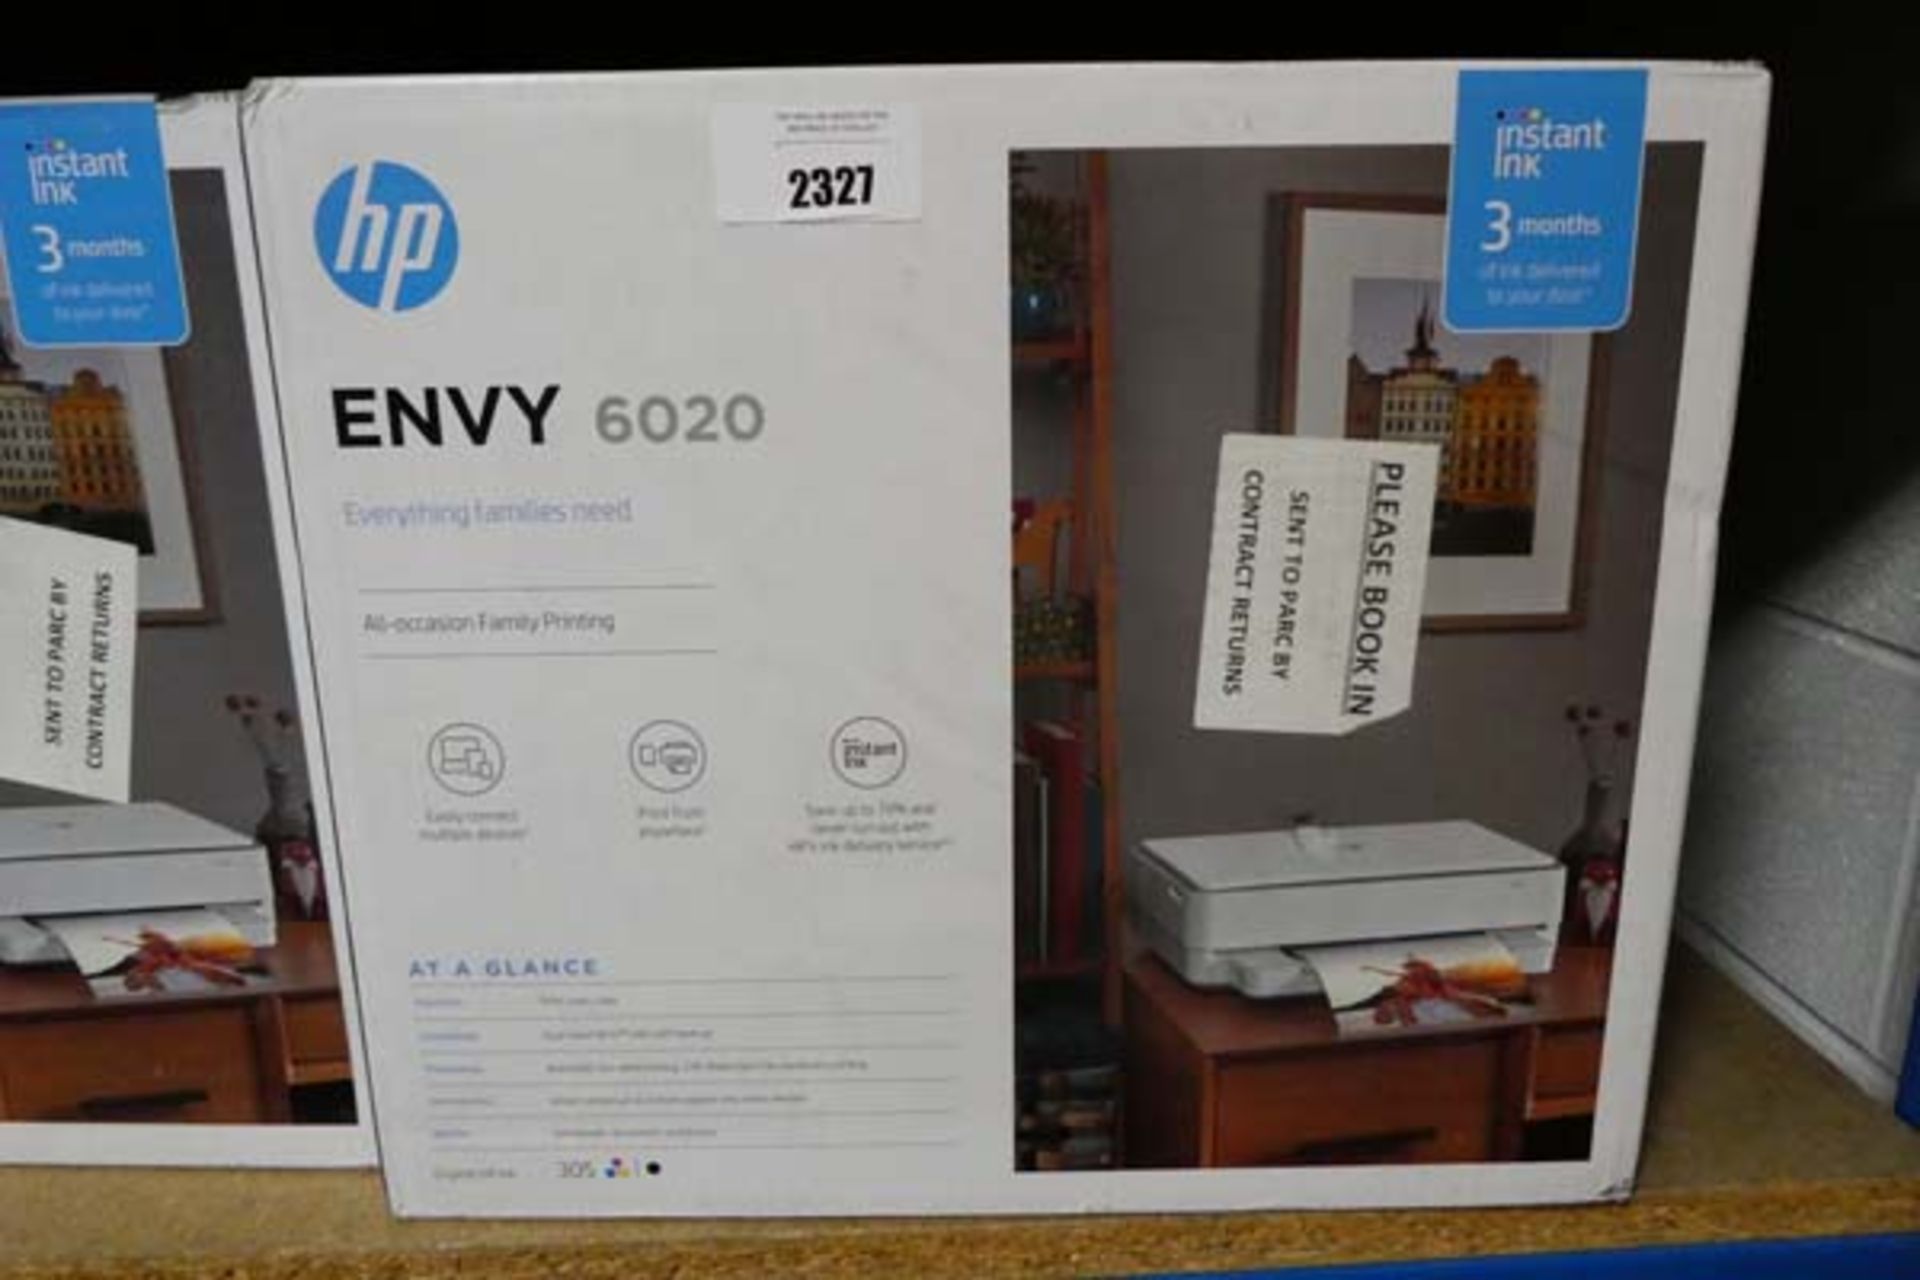 HP Envy 6020 all in one printer in box